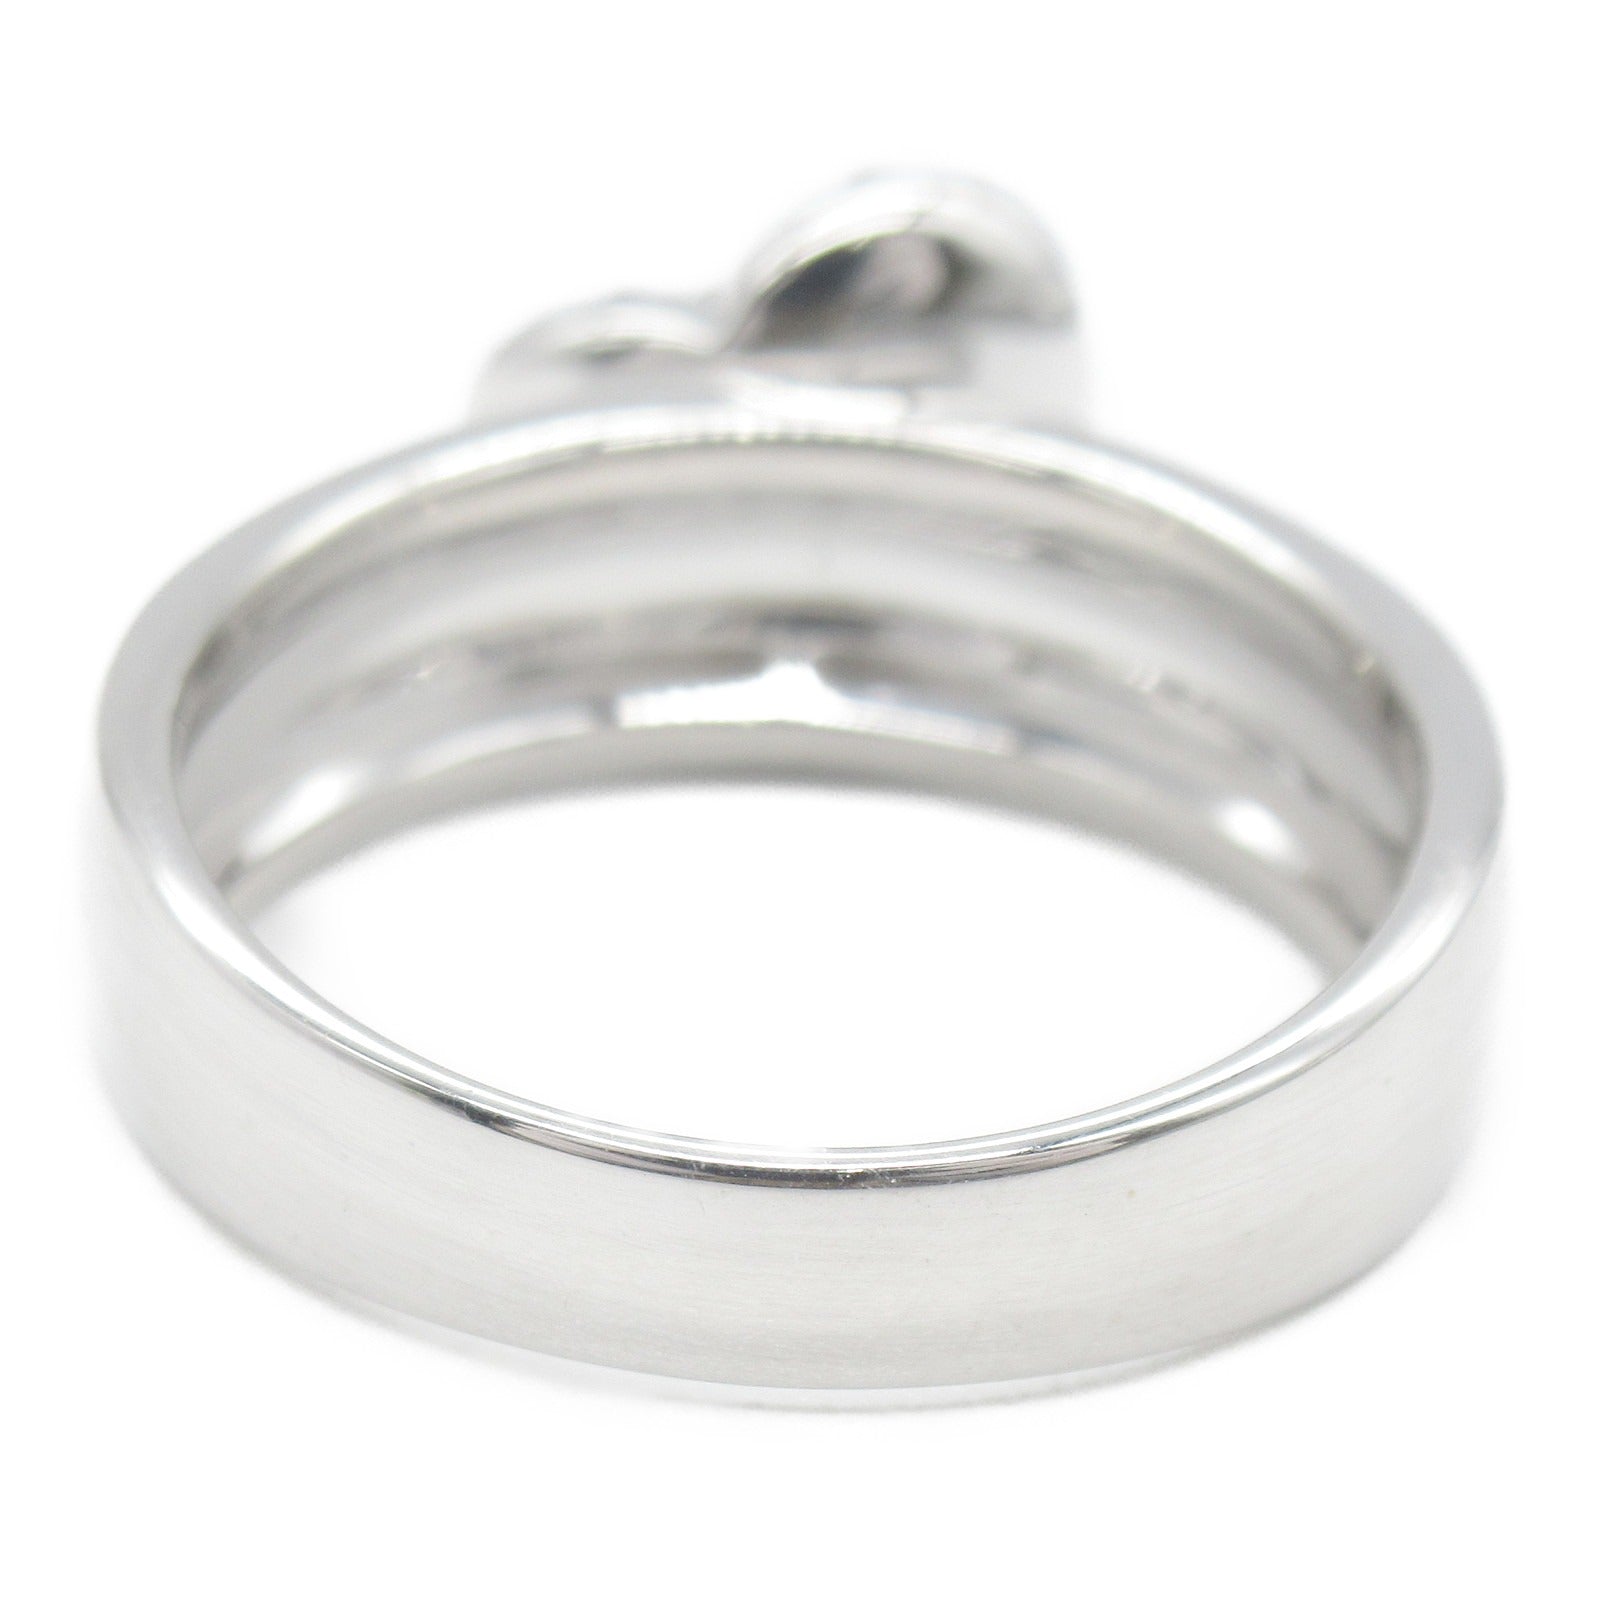 Ponte Vecchio Diamond Ring Ring Ring Jewelry K18WG (White G) Diamond  Clear Diamond 6.2g